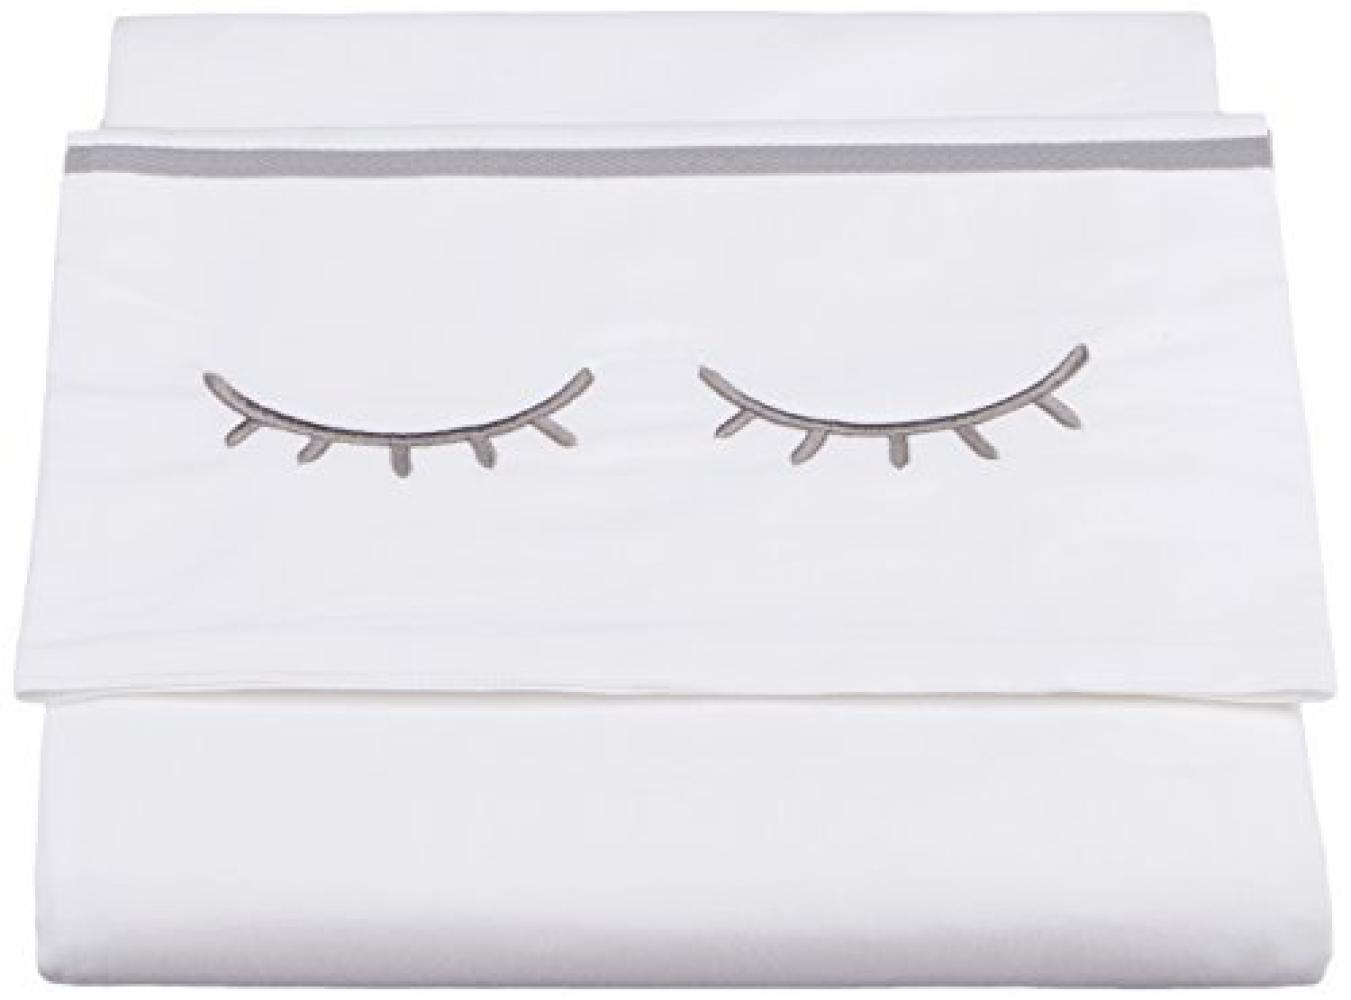 Meyco Bettlaken Sleepy eyes, 100 x 150 cm, grau Bild 1